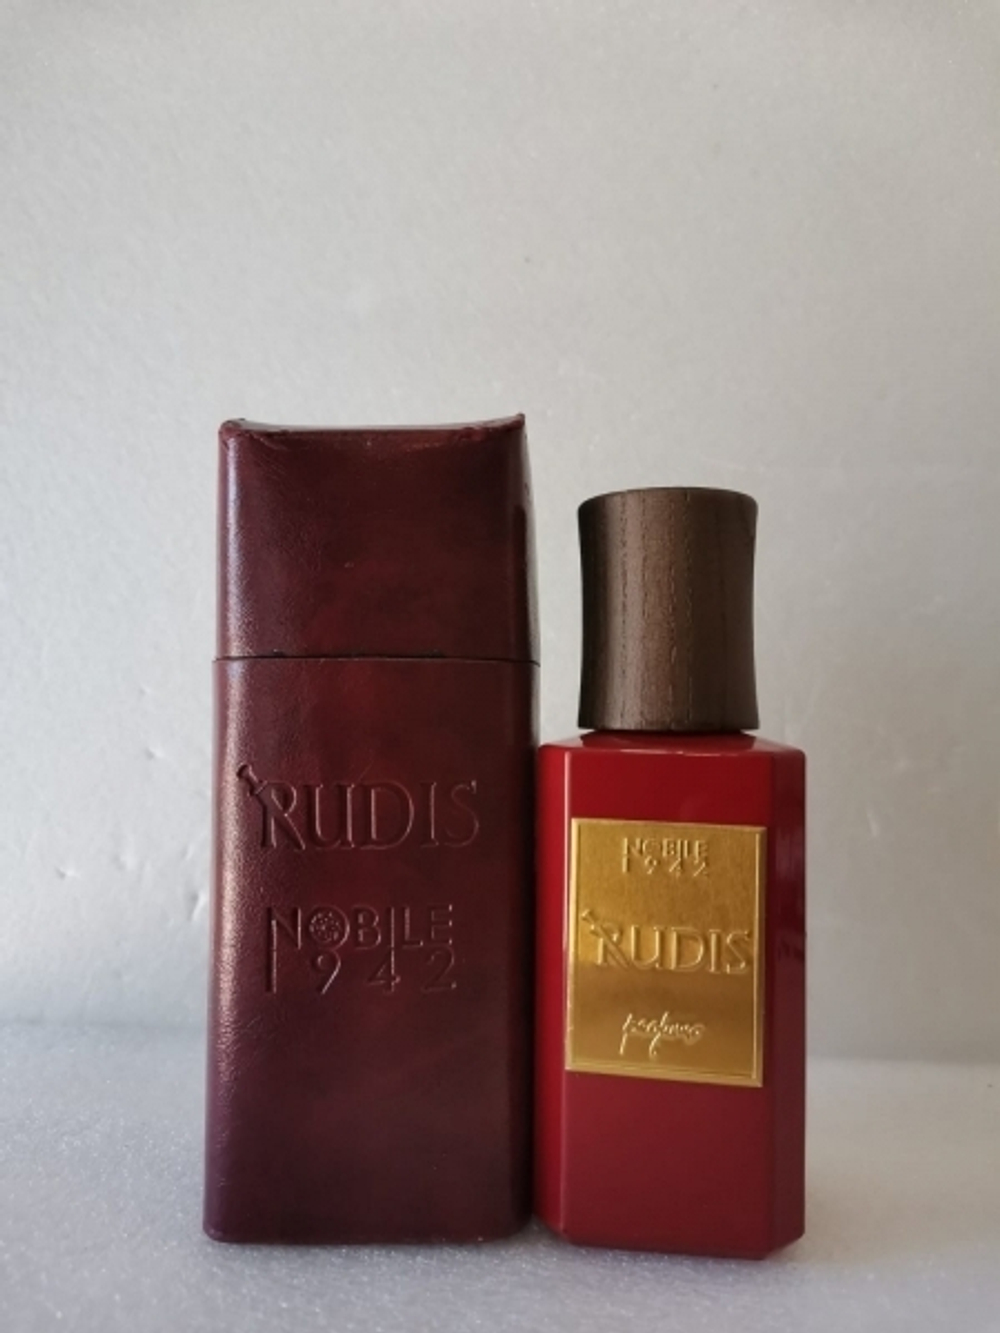 Nobile 1942 Rudis 75 ml (duty free парфюмерия)